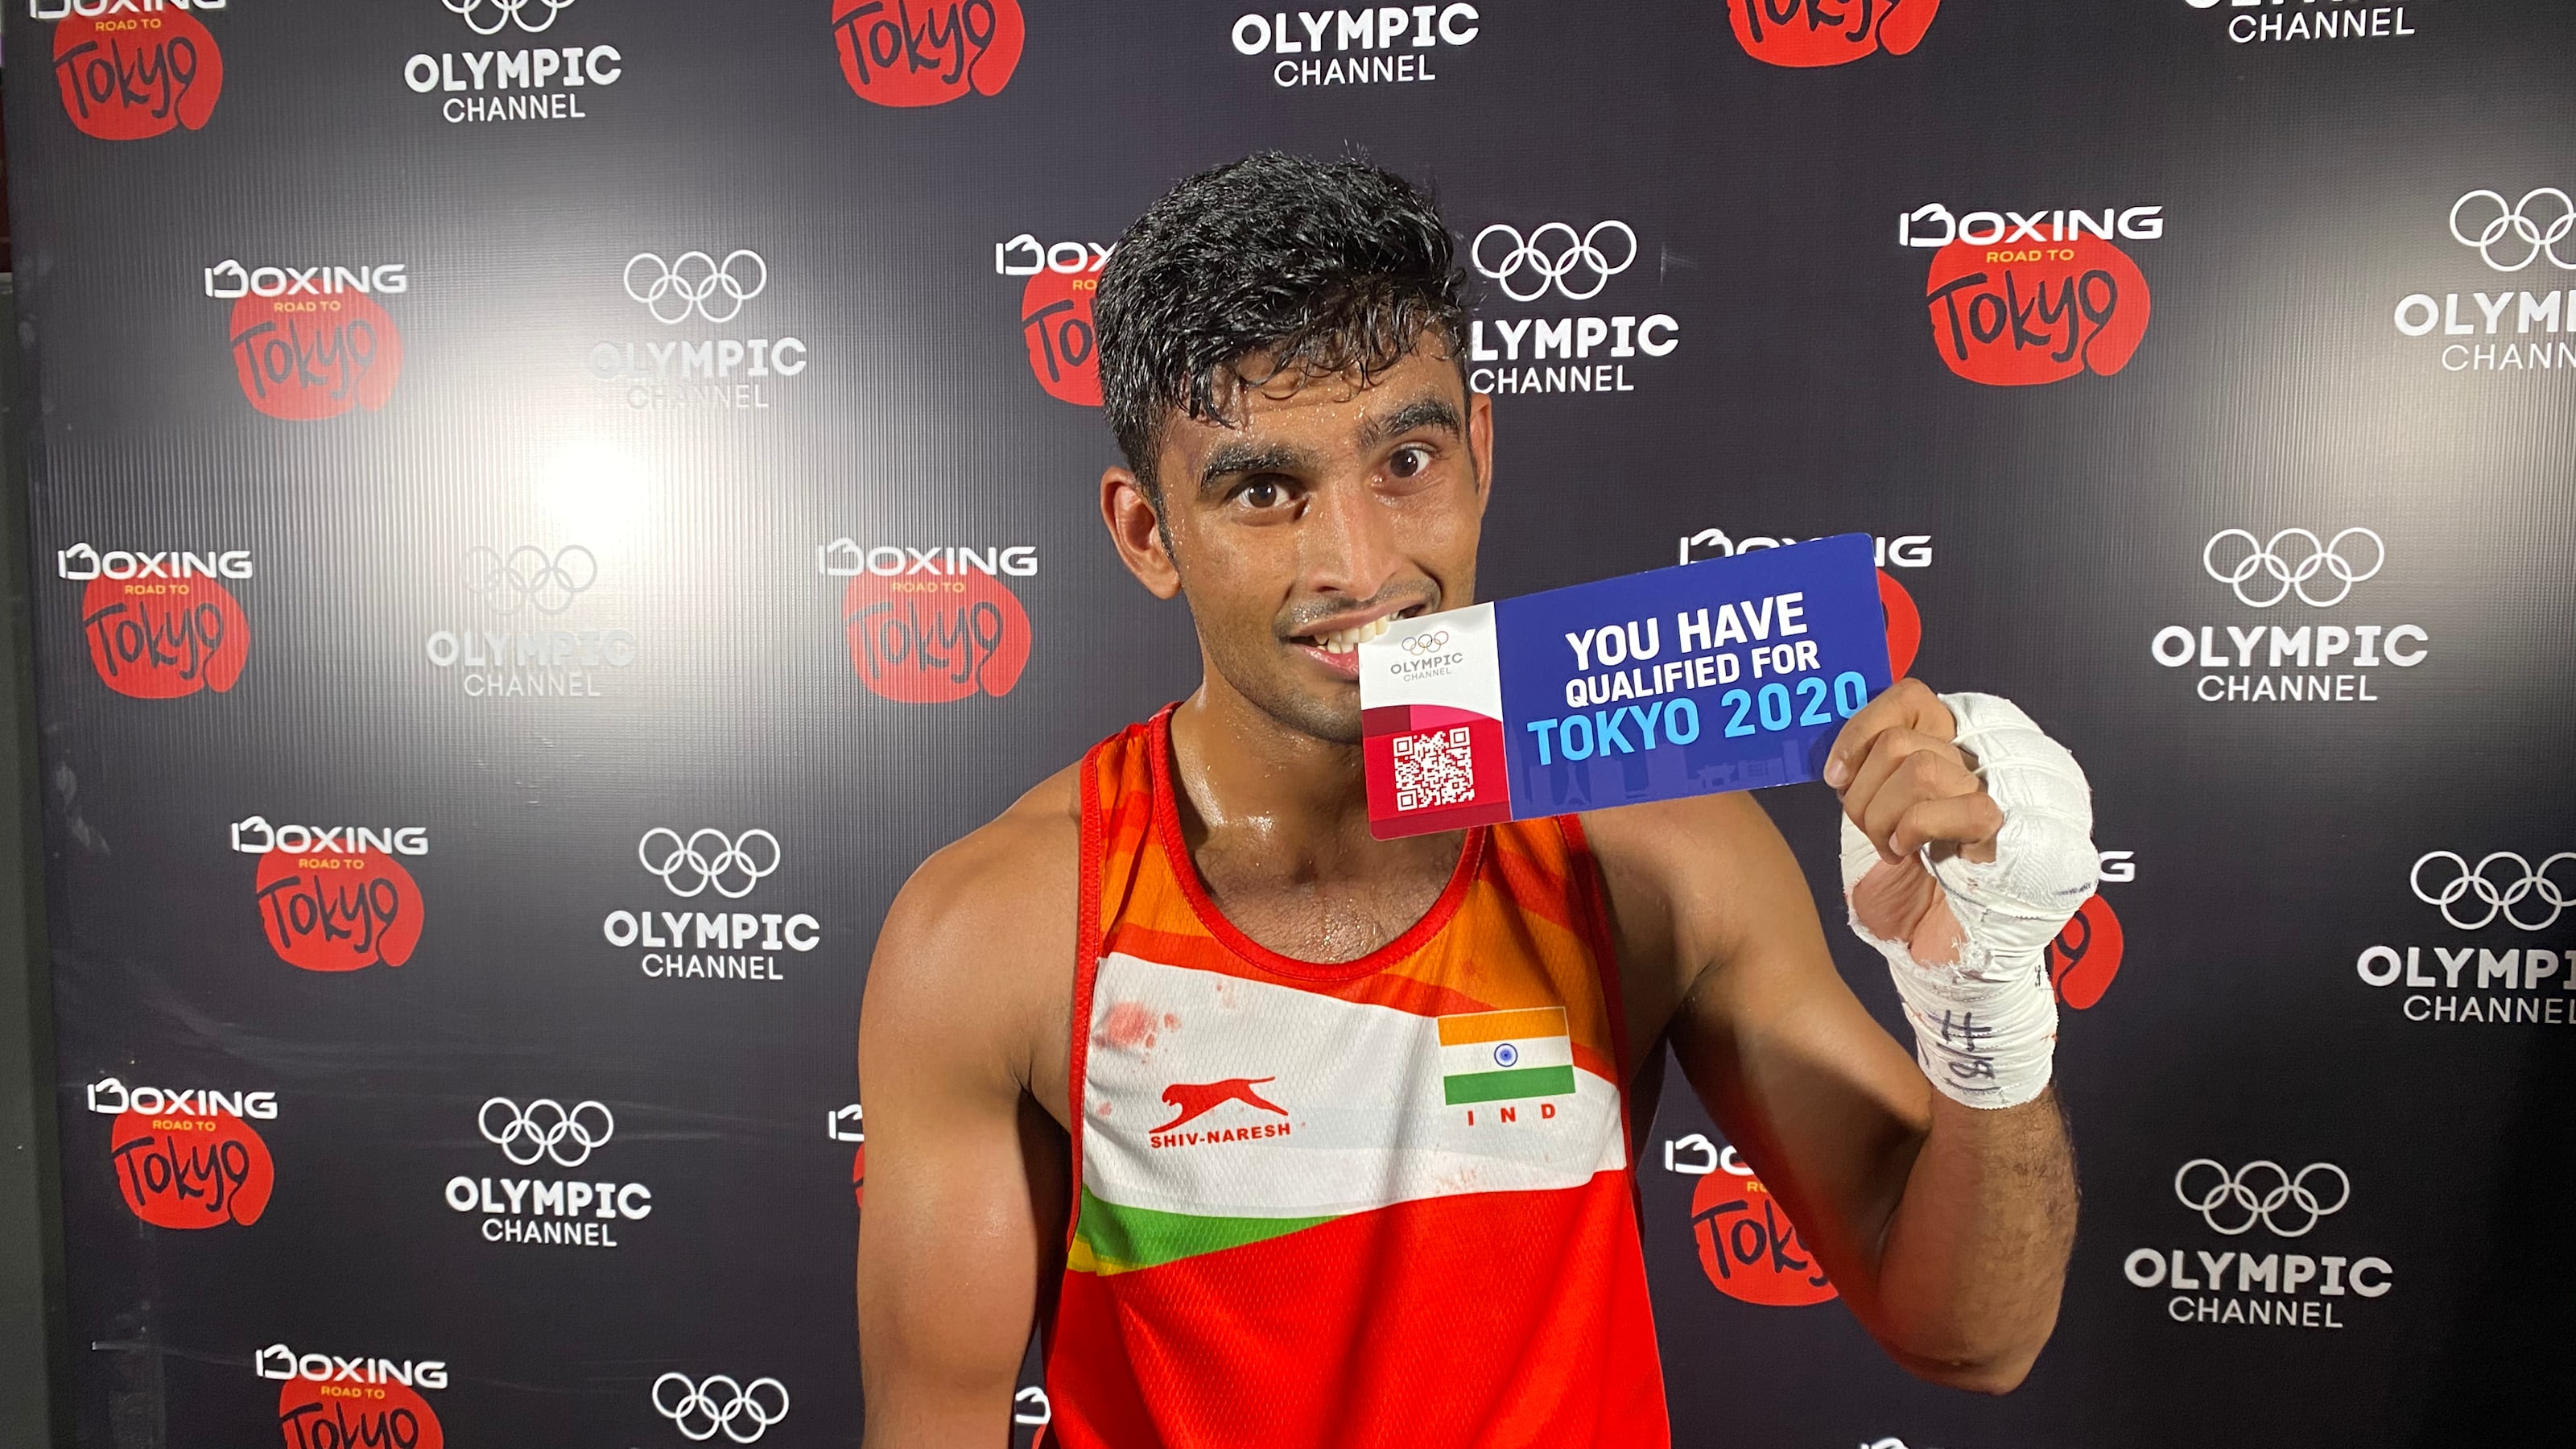 Manish Kaushik wins box off to qualify for 2020 Olympics